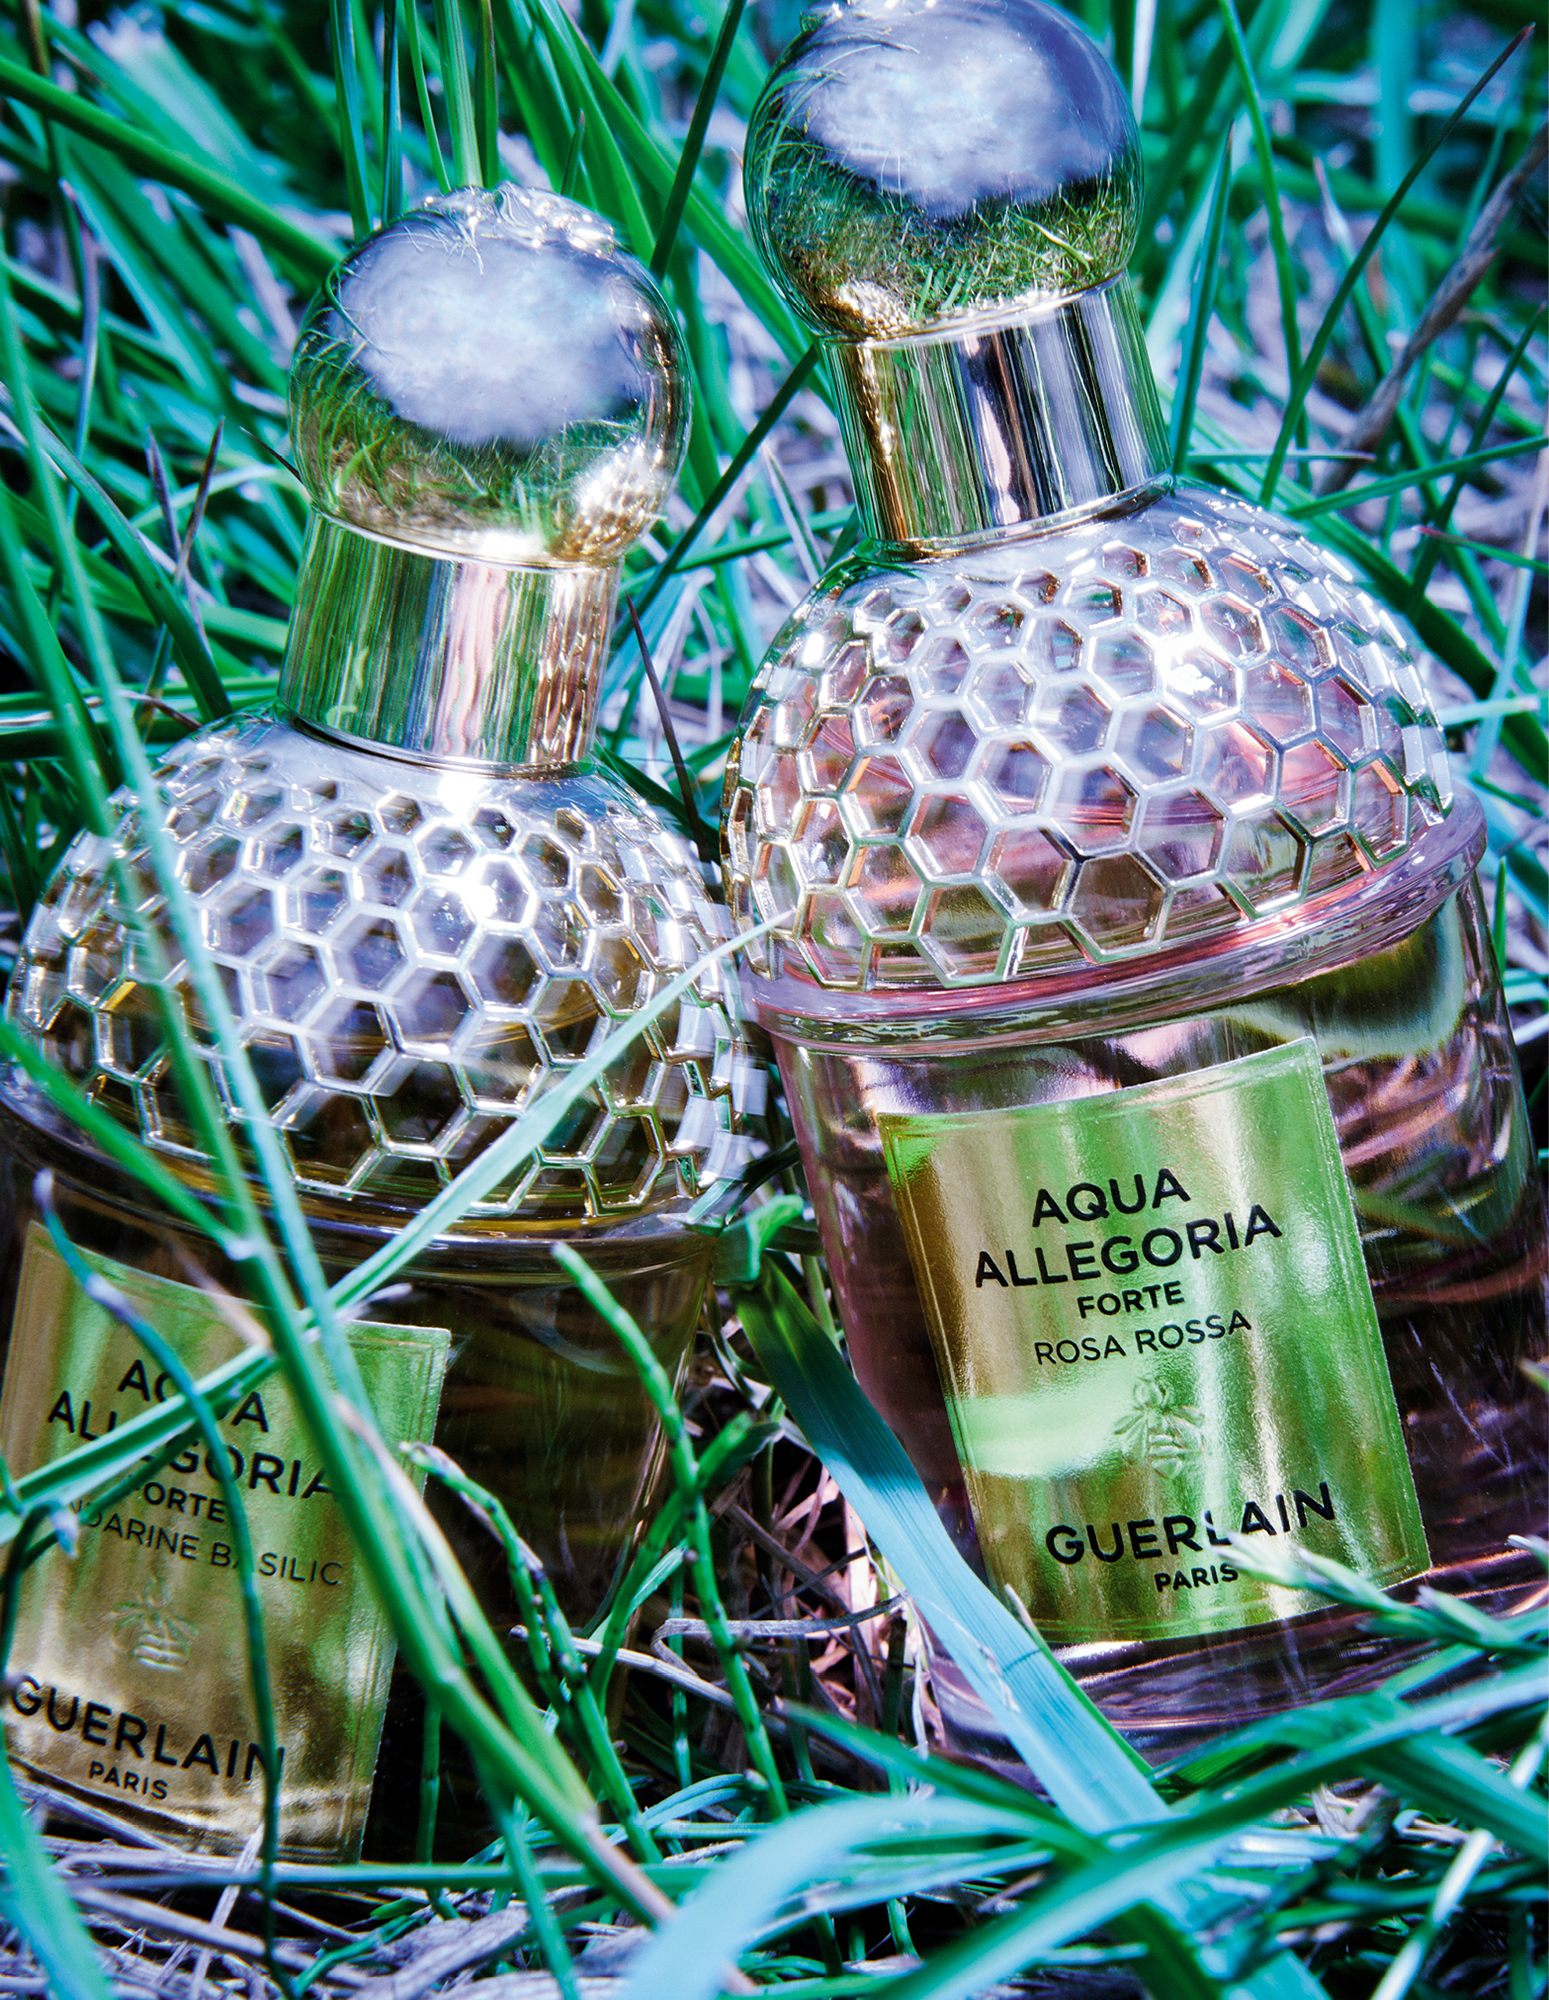 Guerlain Parfum in Gras